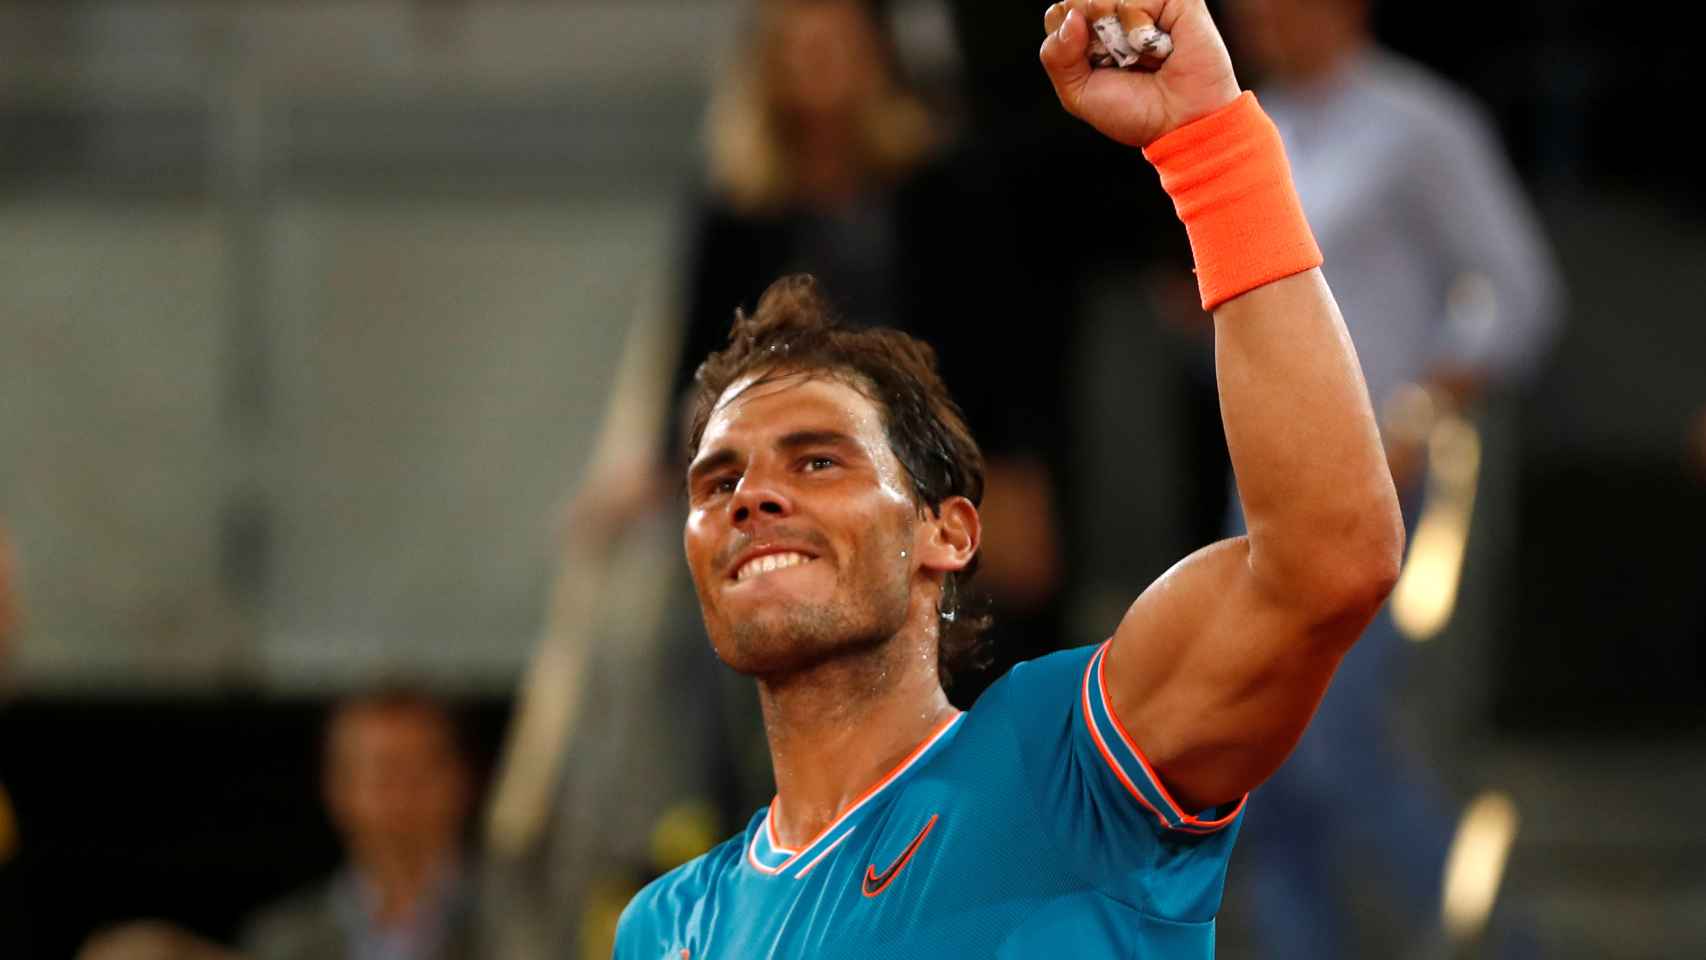 Nadal celebra su victoria contra Wawrinka